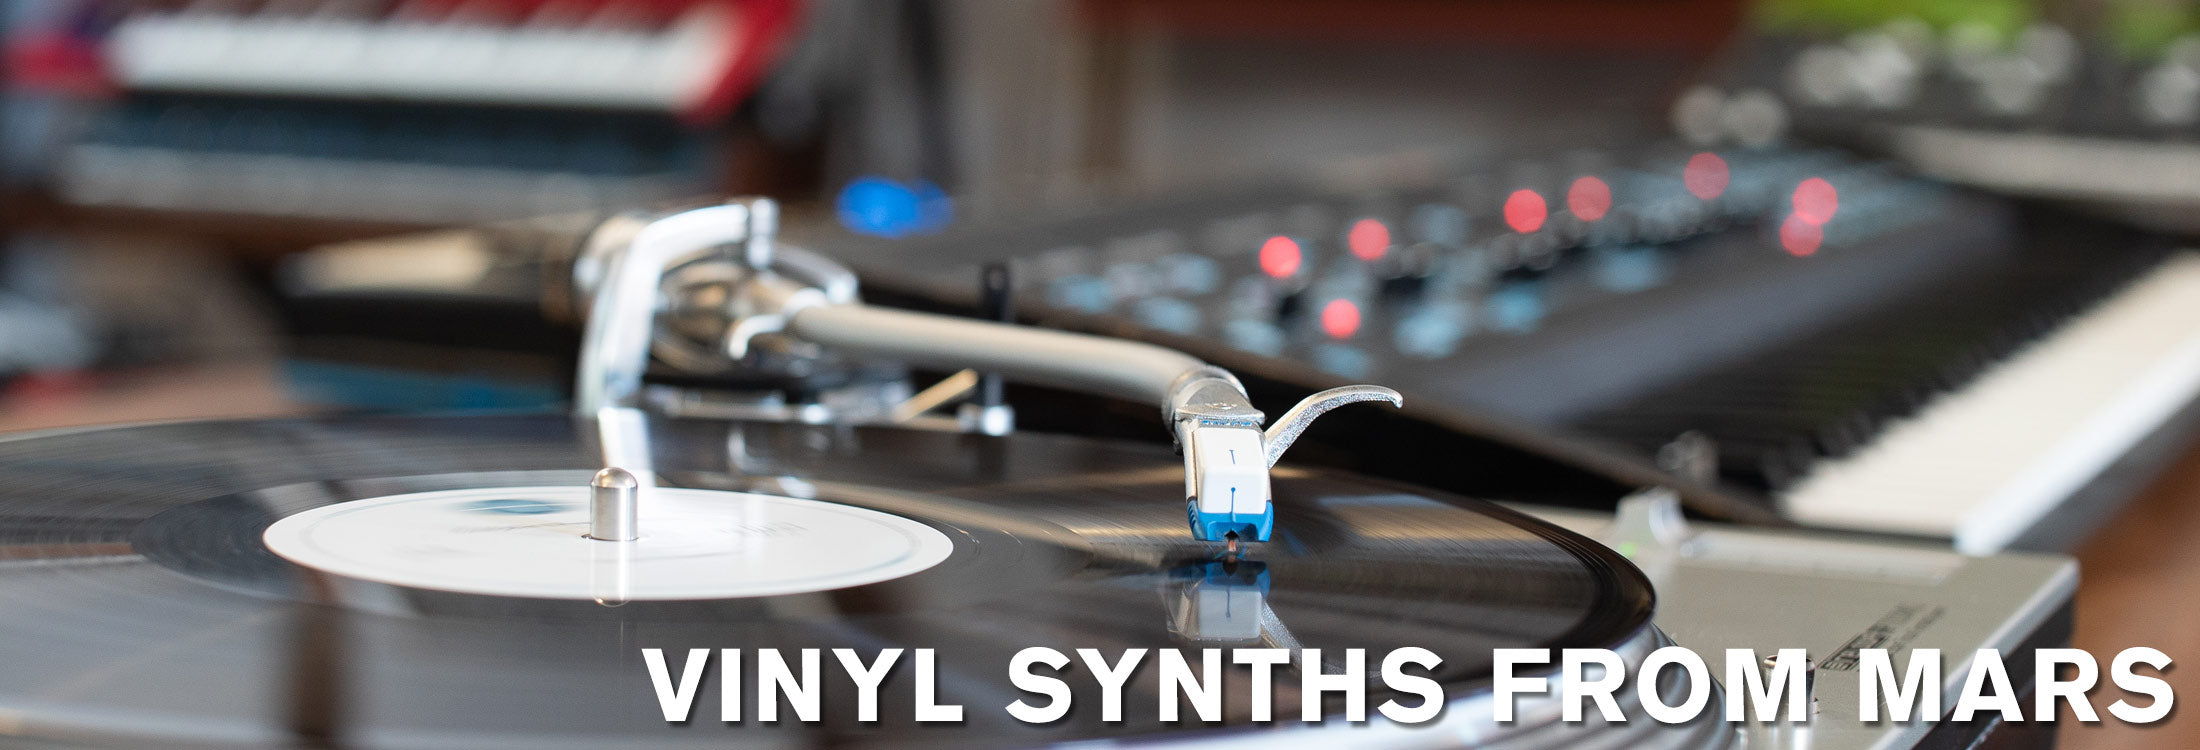 Vinyl-Synths